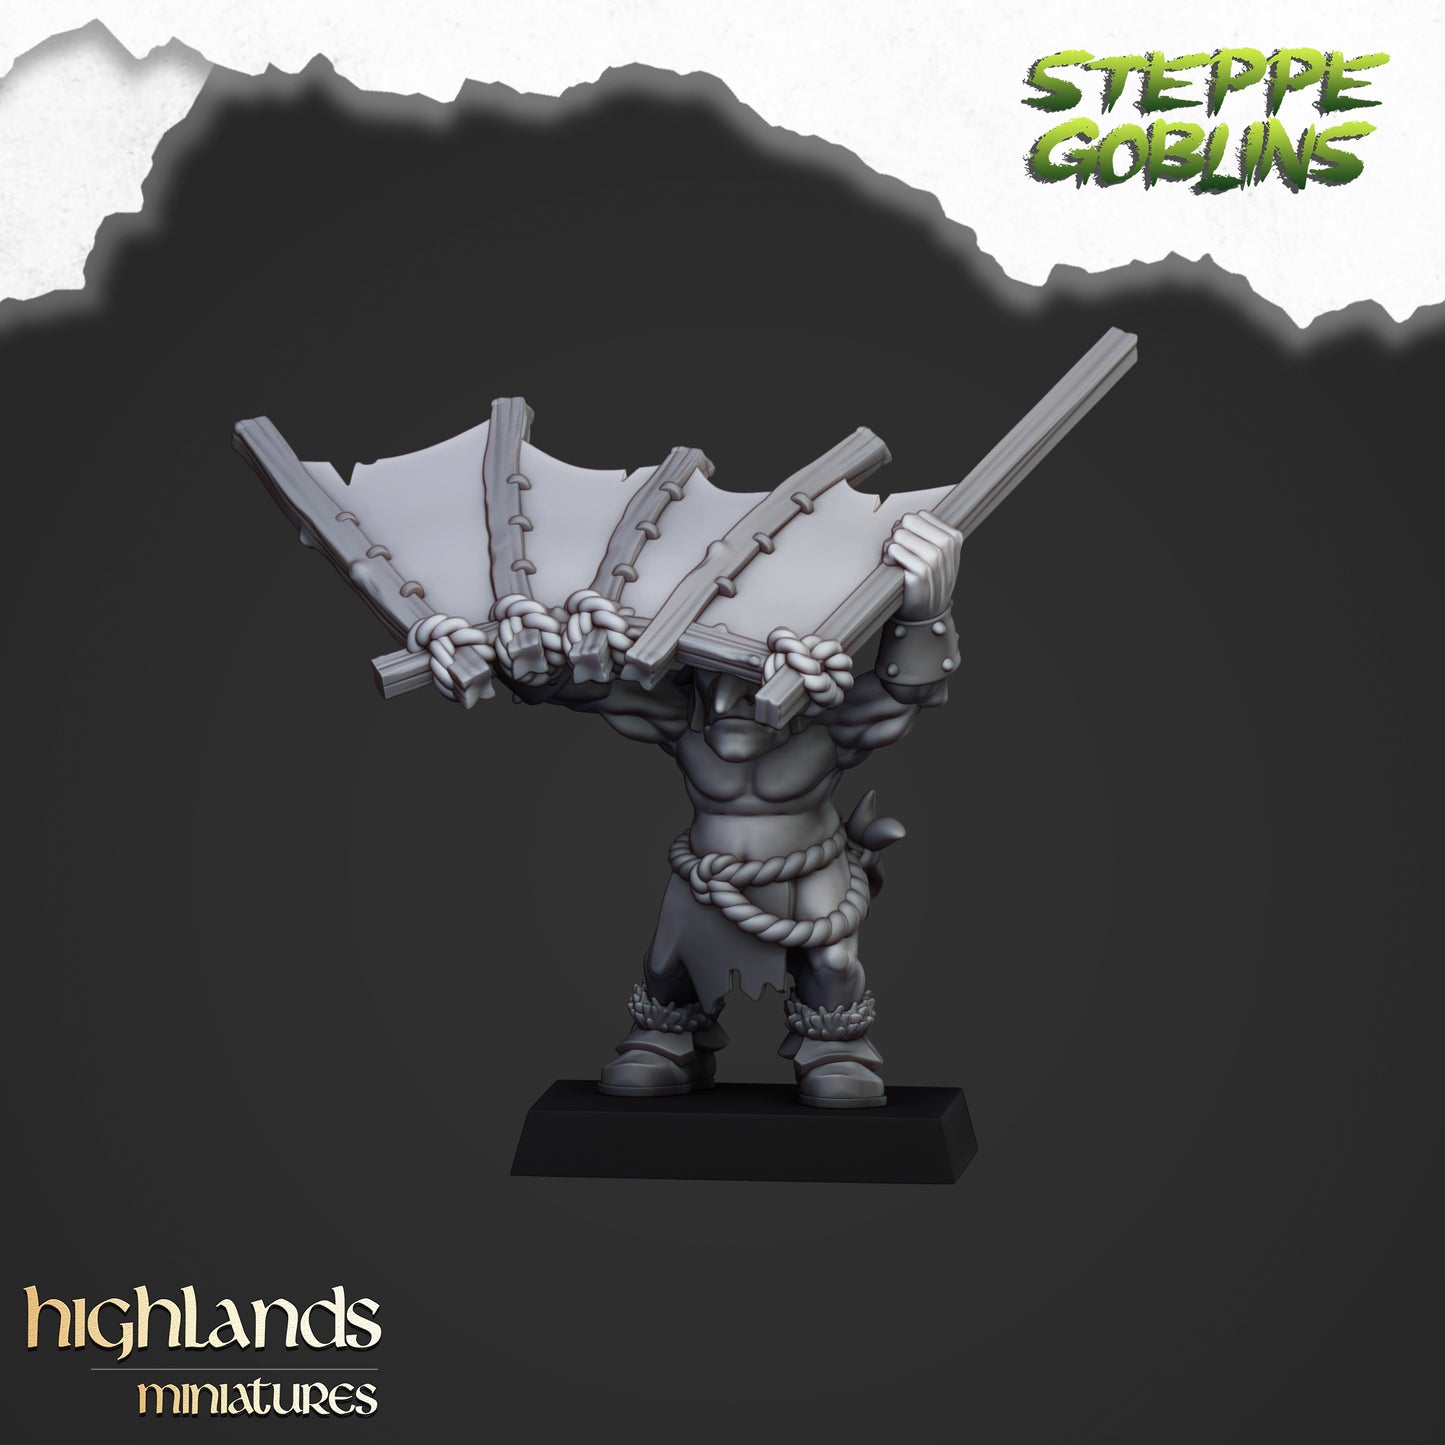 Steppe Goblin Launcher from Highlands Miniatures